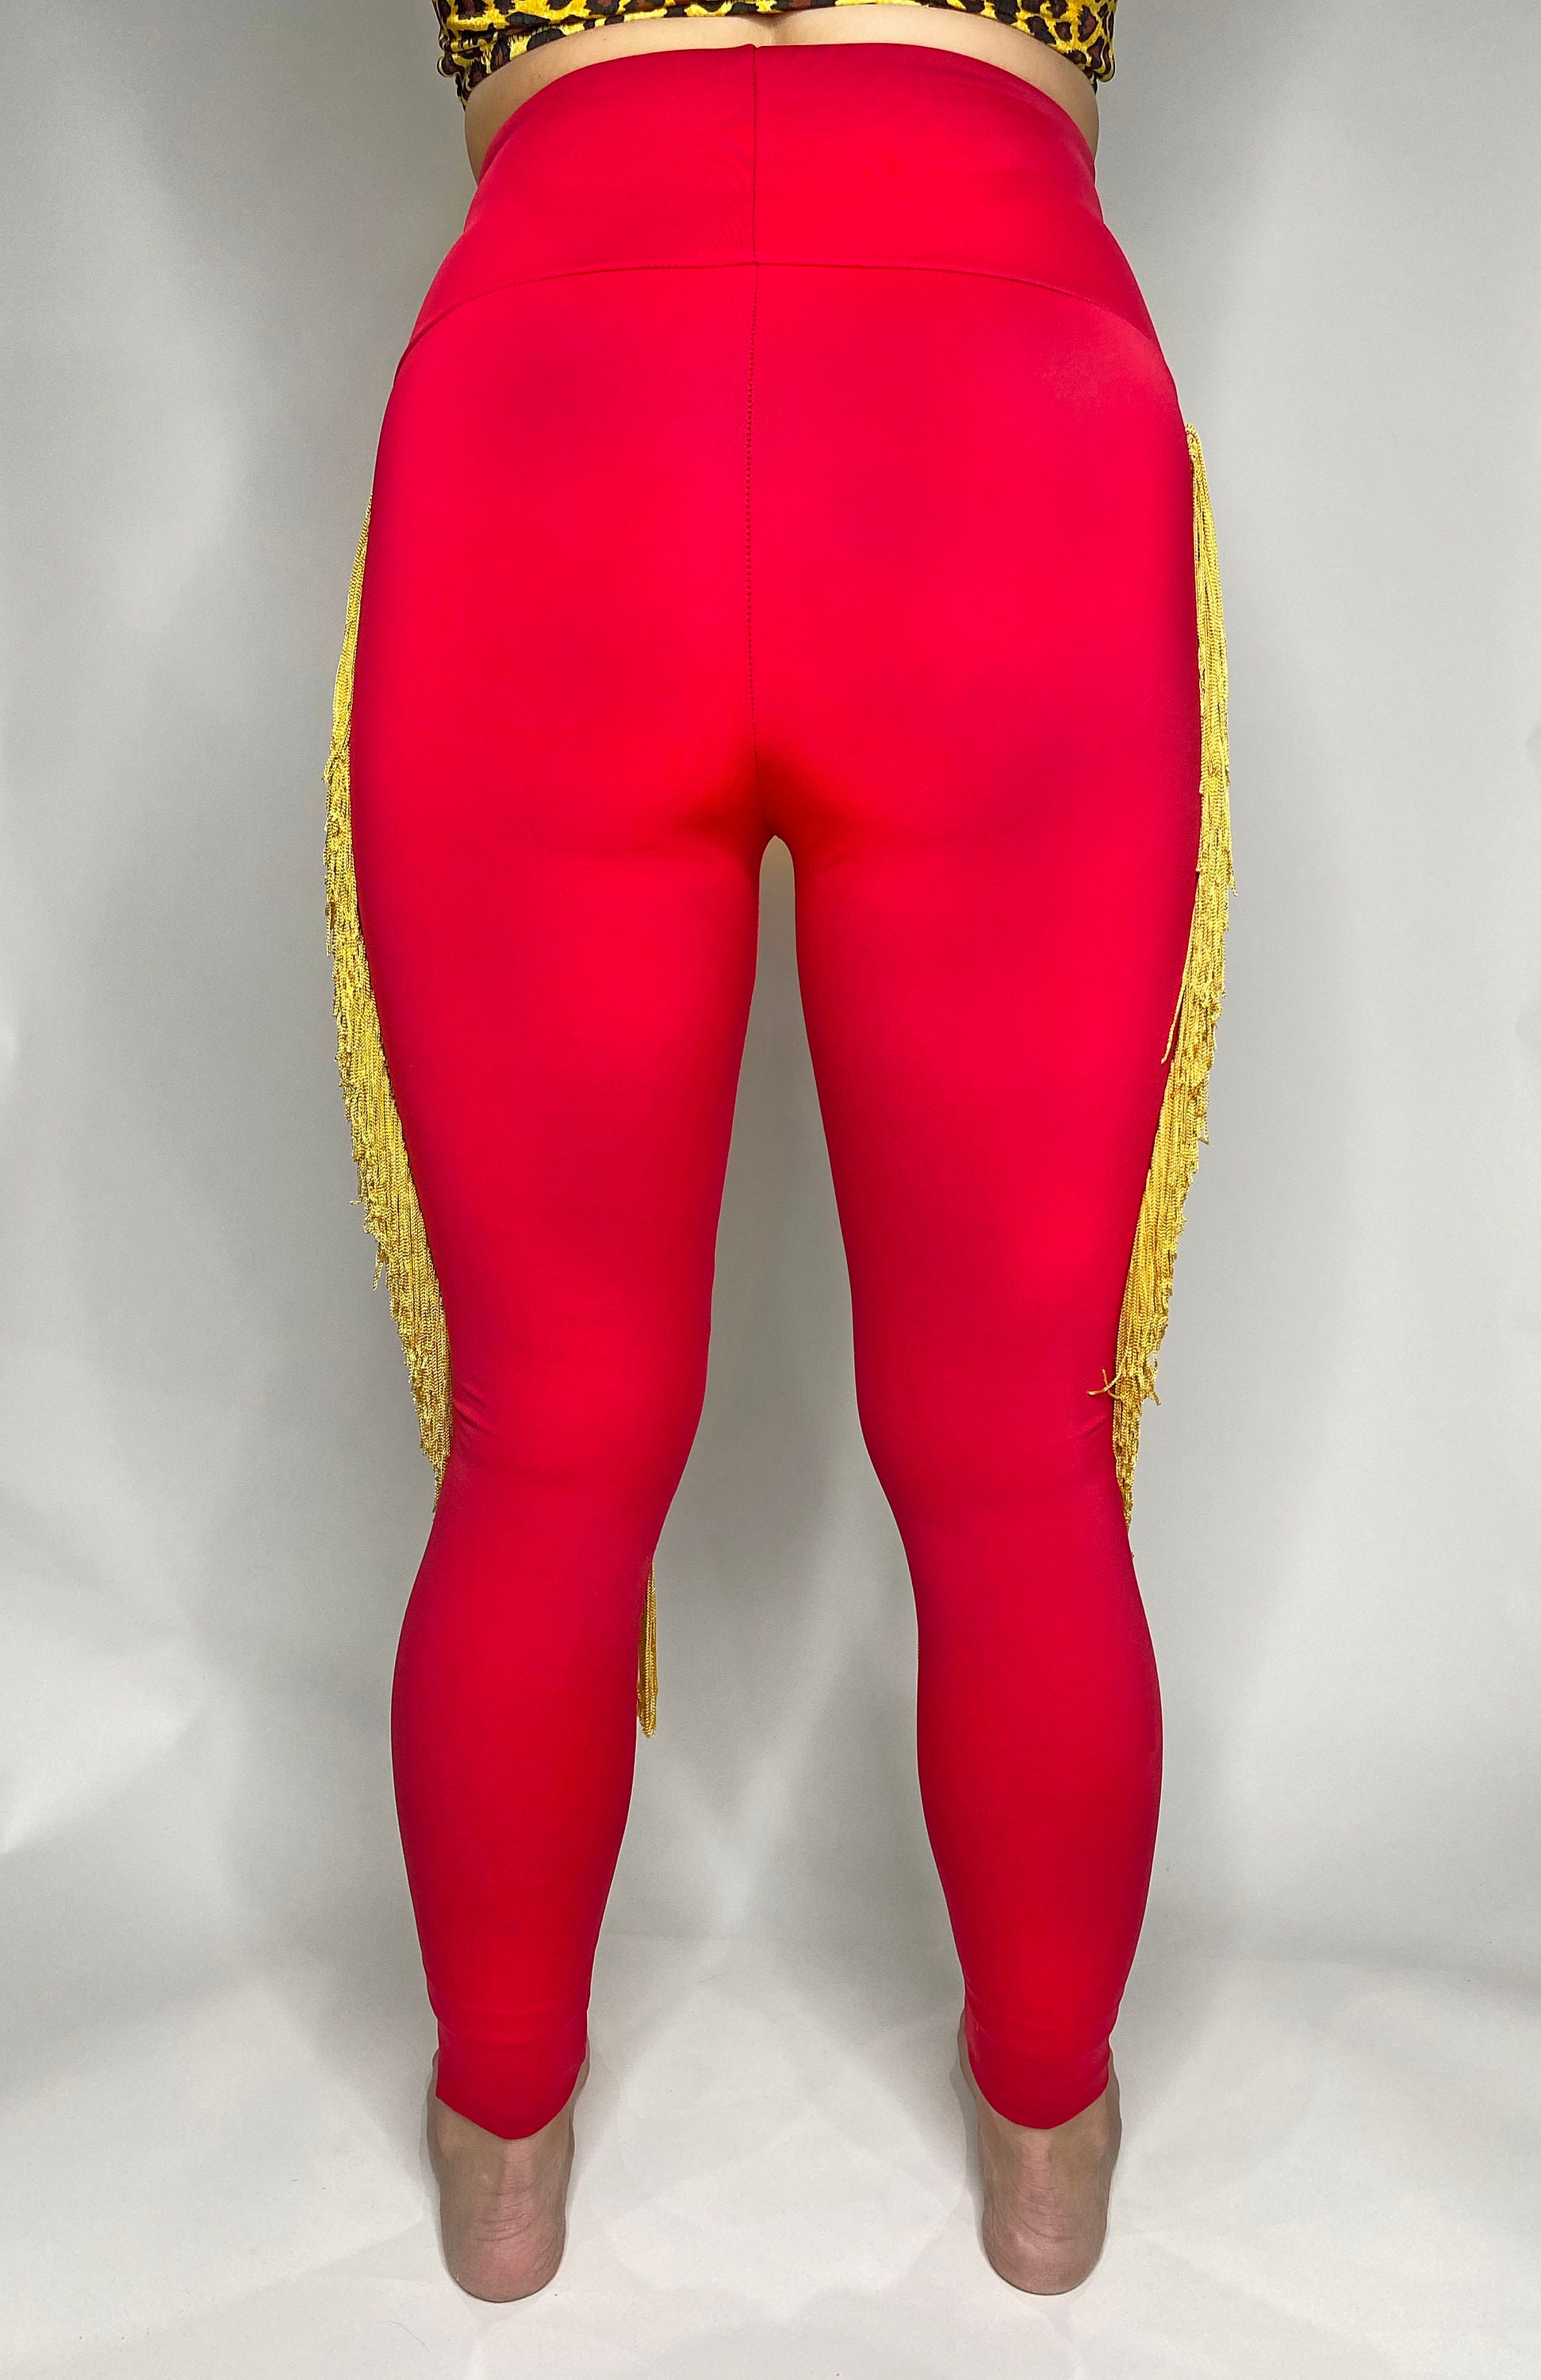 Squeaky Chimp San Francisco 49ers Sports Football Uniform Leggings (Color: 49ers Gold, Size: XL, Legging Length: Full Length)